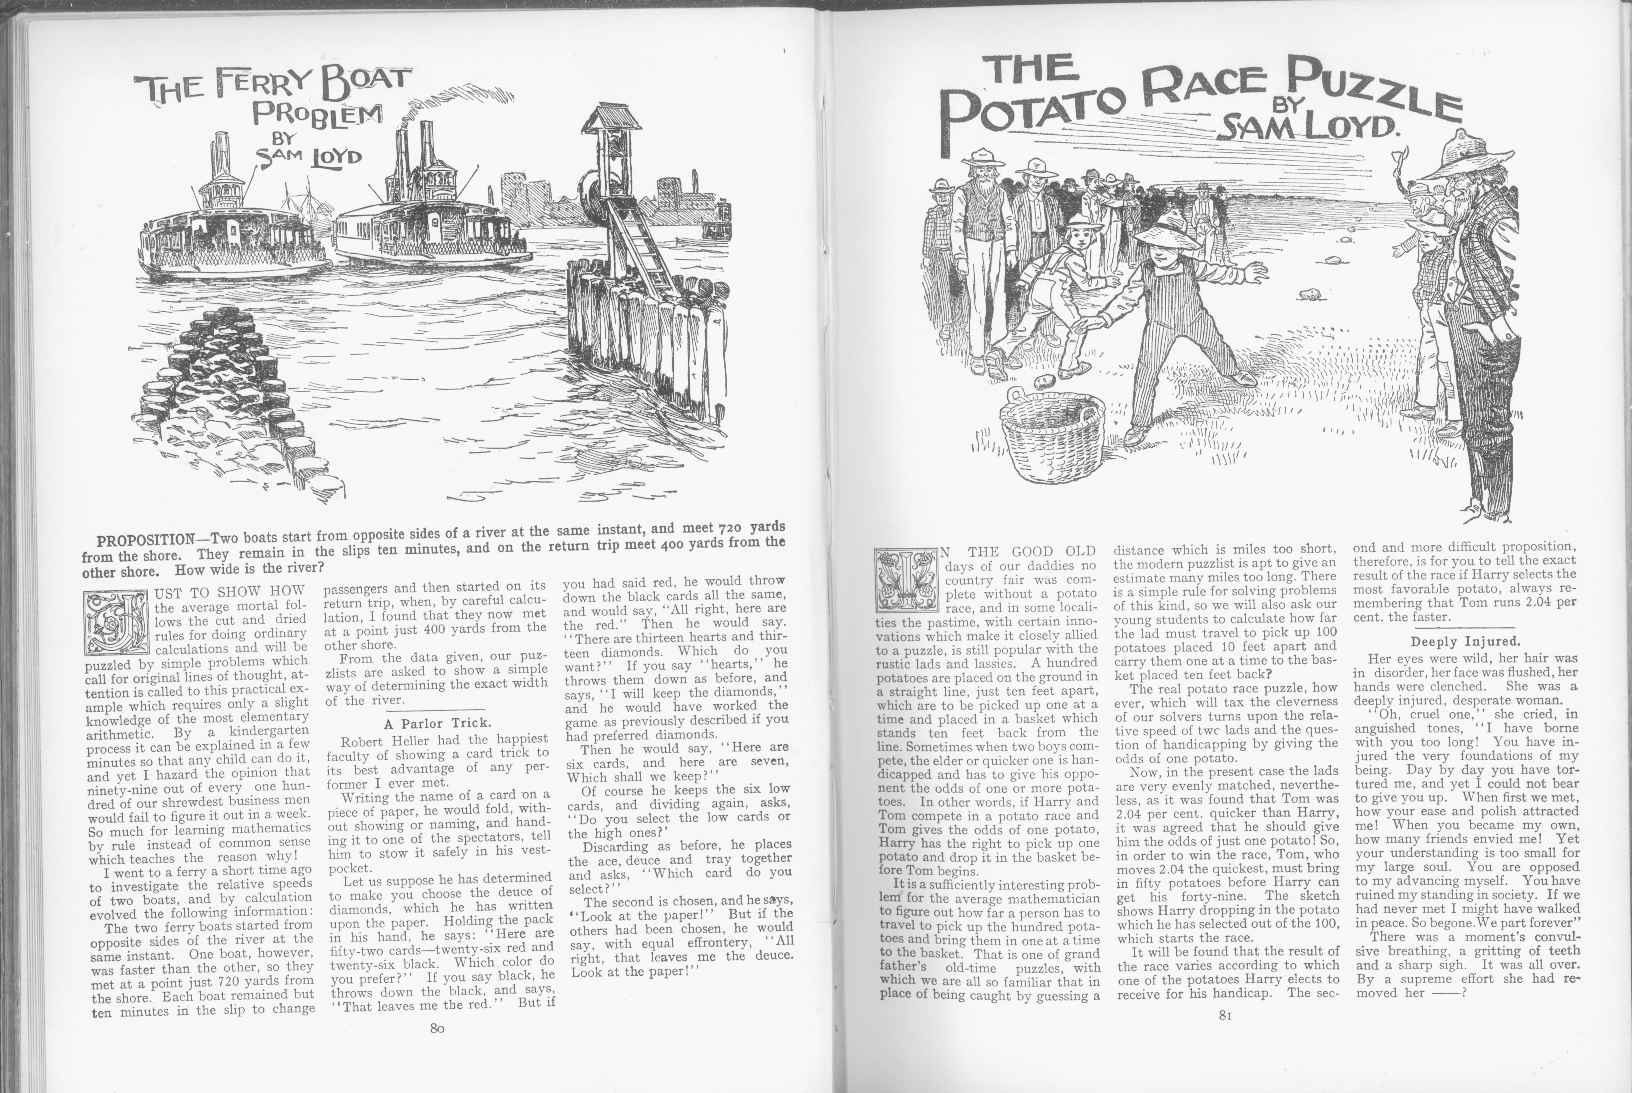 Sam Loyd - Cyclopedia of Puzzles - page 80-81